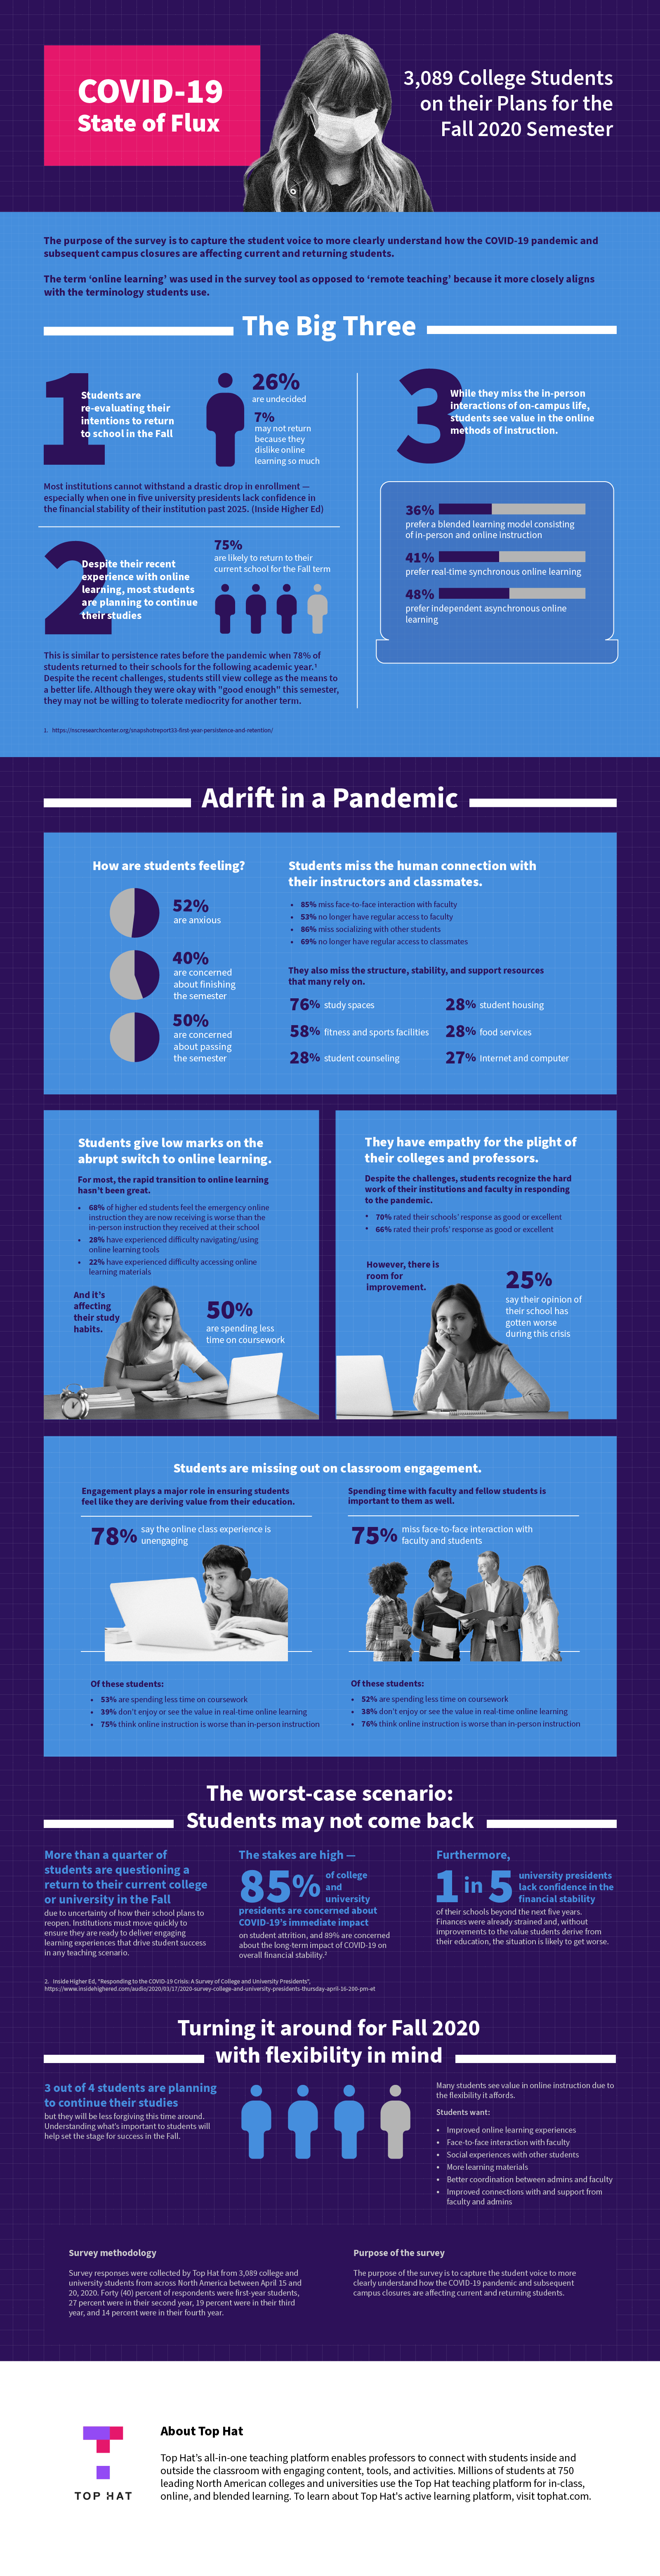 Top Hat Student Survey Infographic